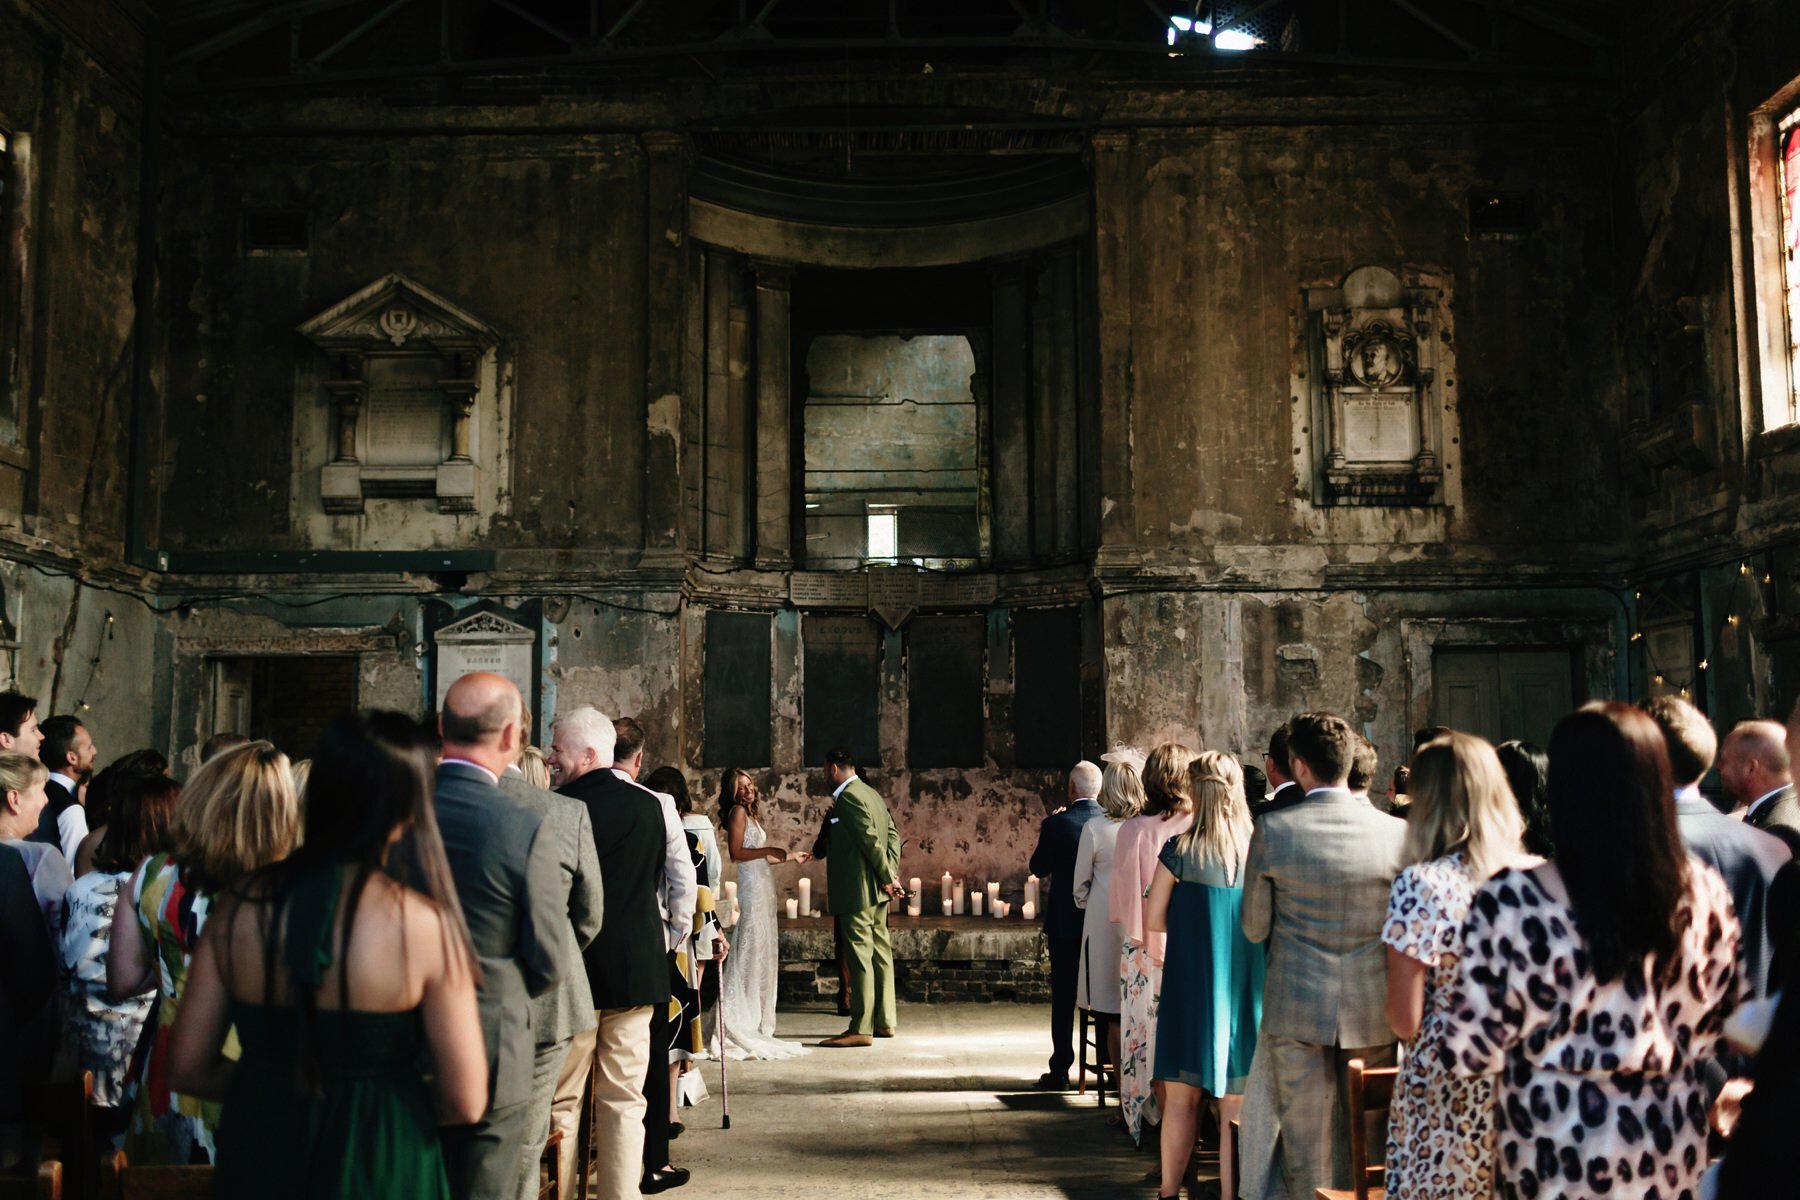 A wedding ceremony in progress at Asylum Chapel in London.